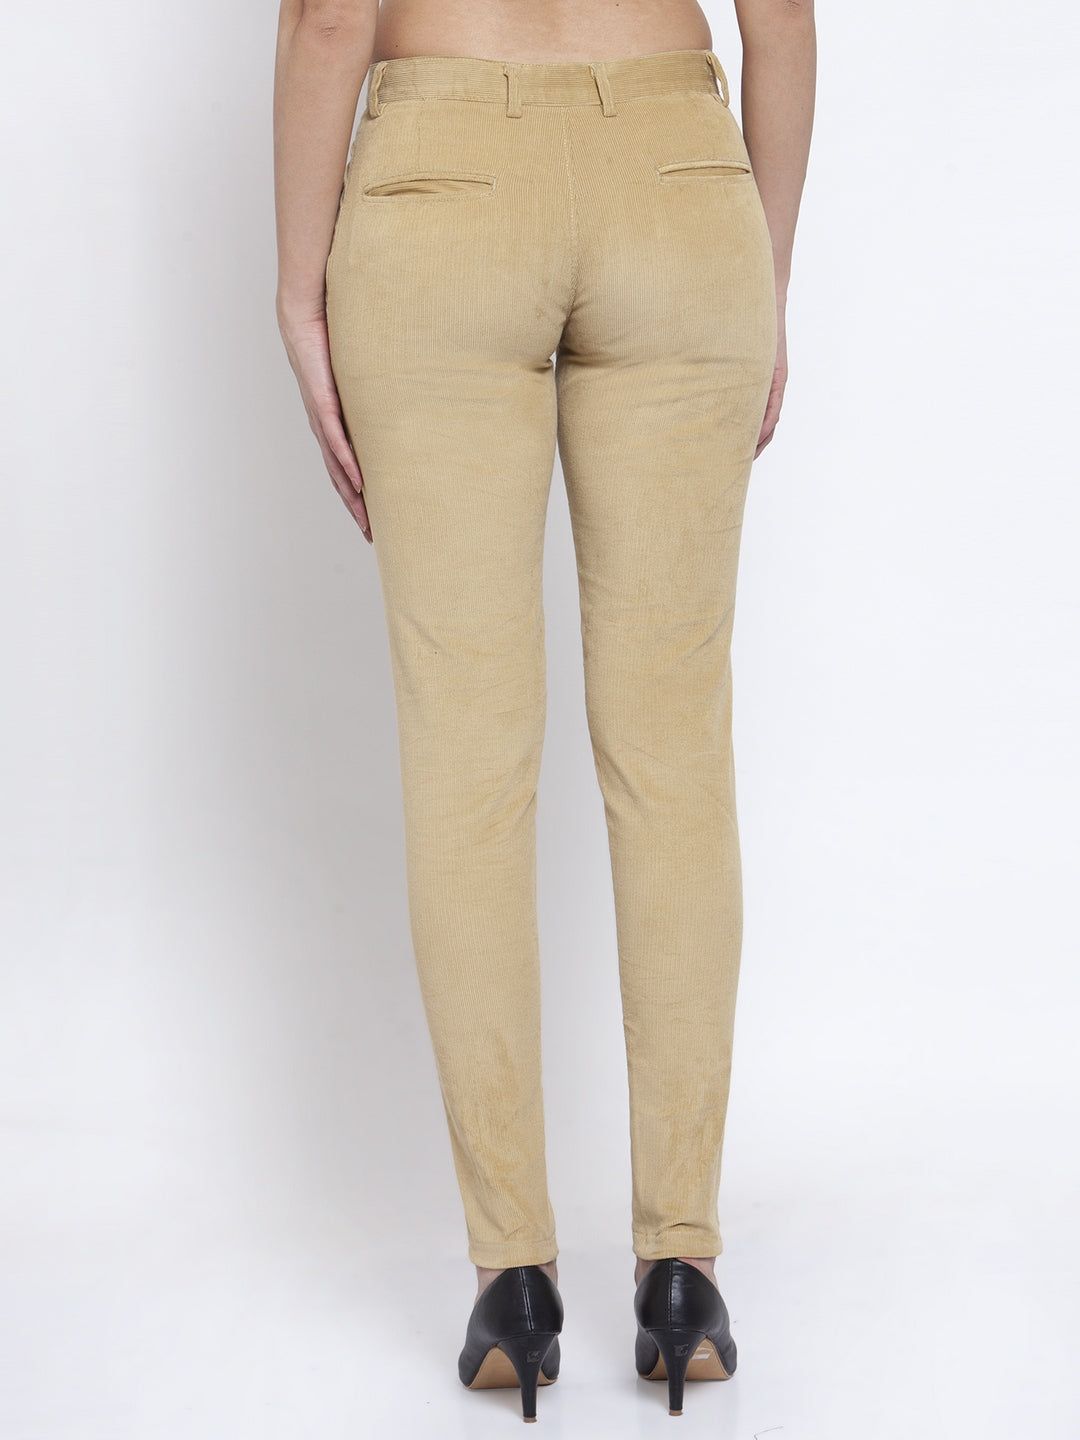 Narrow Fit Men Hanex Checks Cotton Trousers at Rs 1530/piece in Delhi | ID:  20930950955